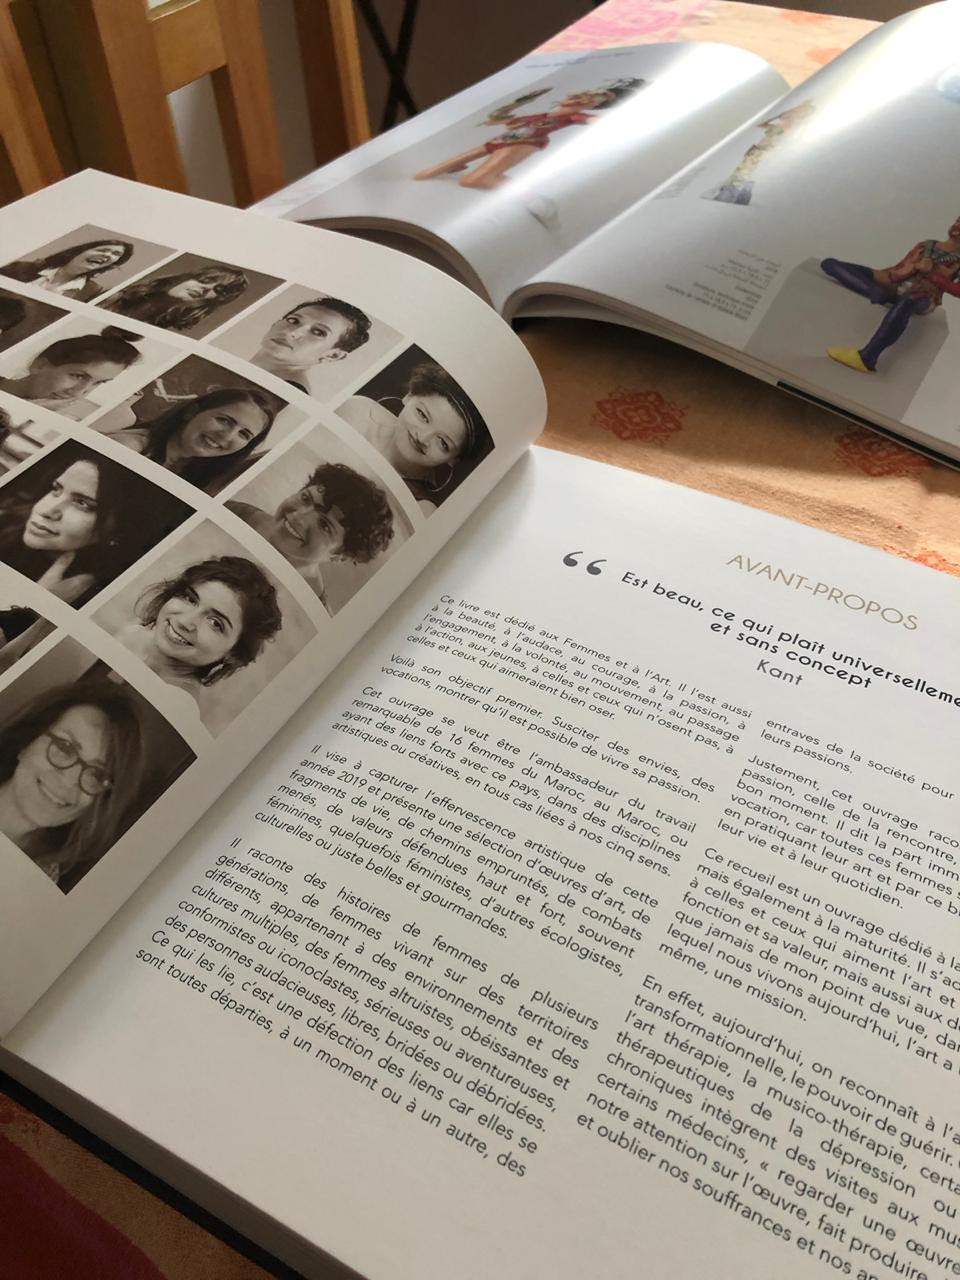 Livre "Artistes & Femmes - Rencontres" - Auteures Lamia Kadiri et Myriem Chraïbi